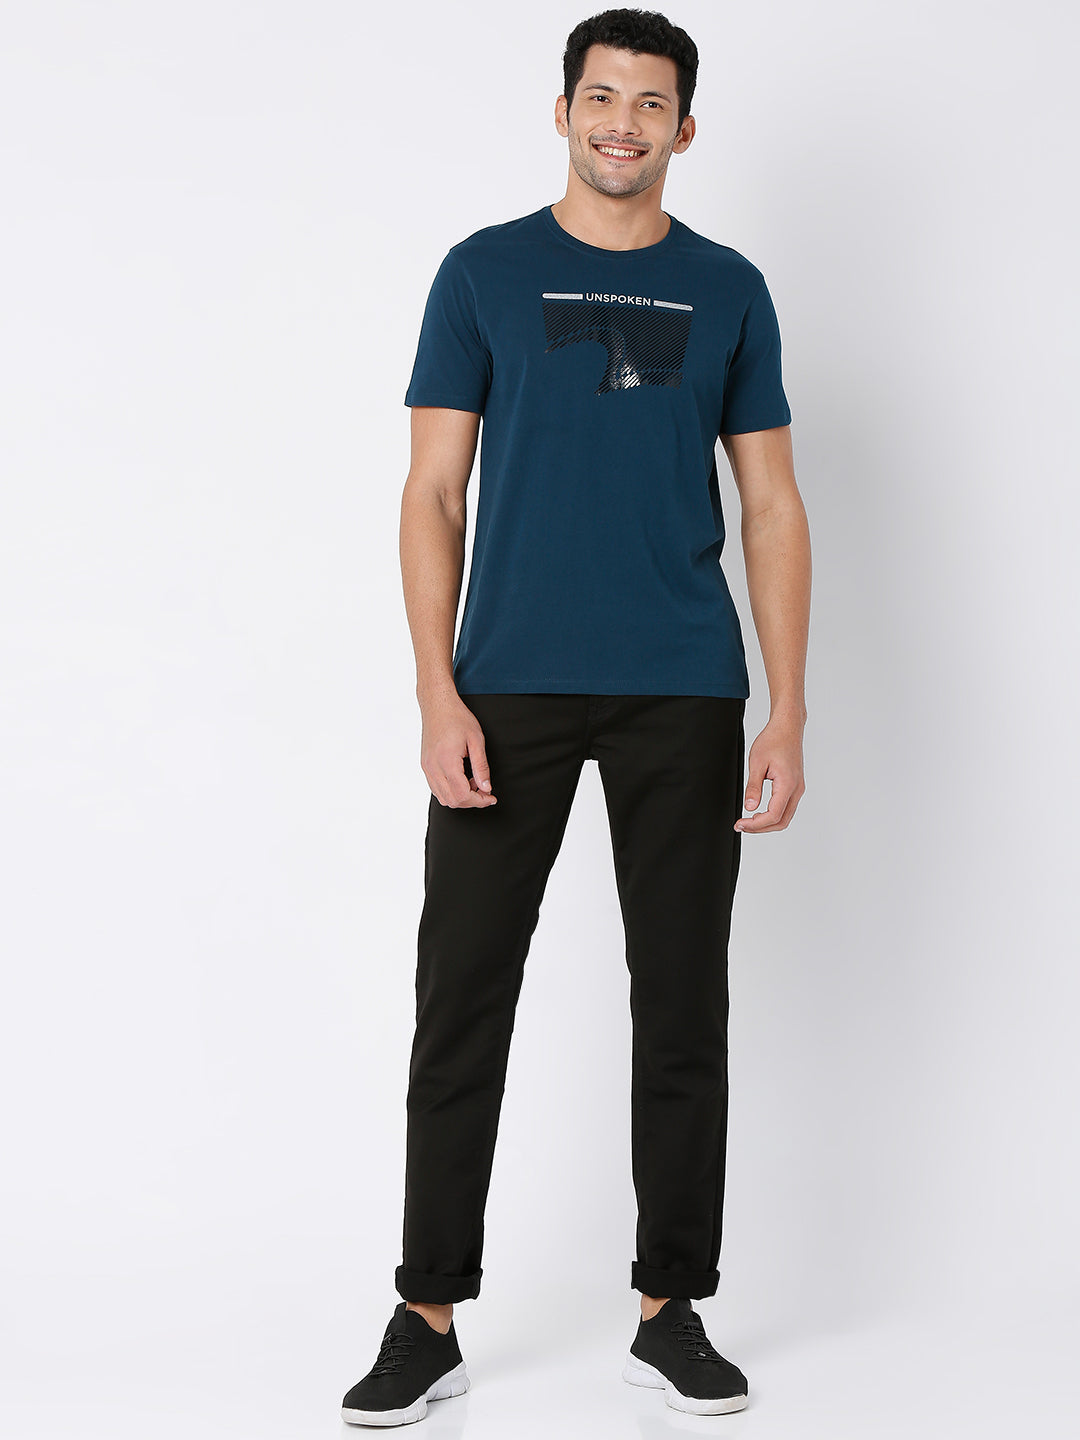 Spykar Teal Blue Cotton Half Sleeve Printed Casual T-shirt For Men